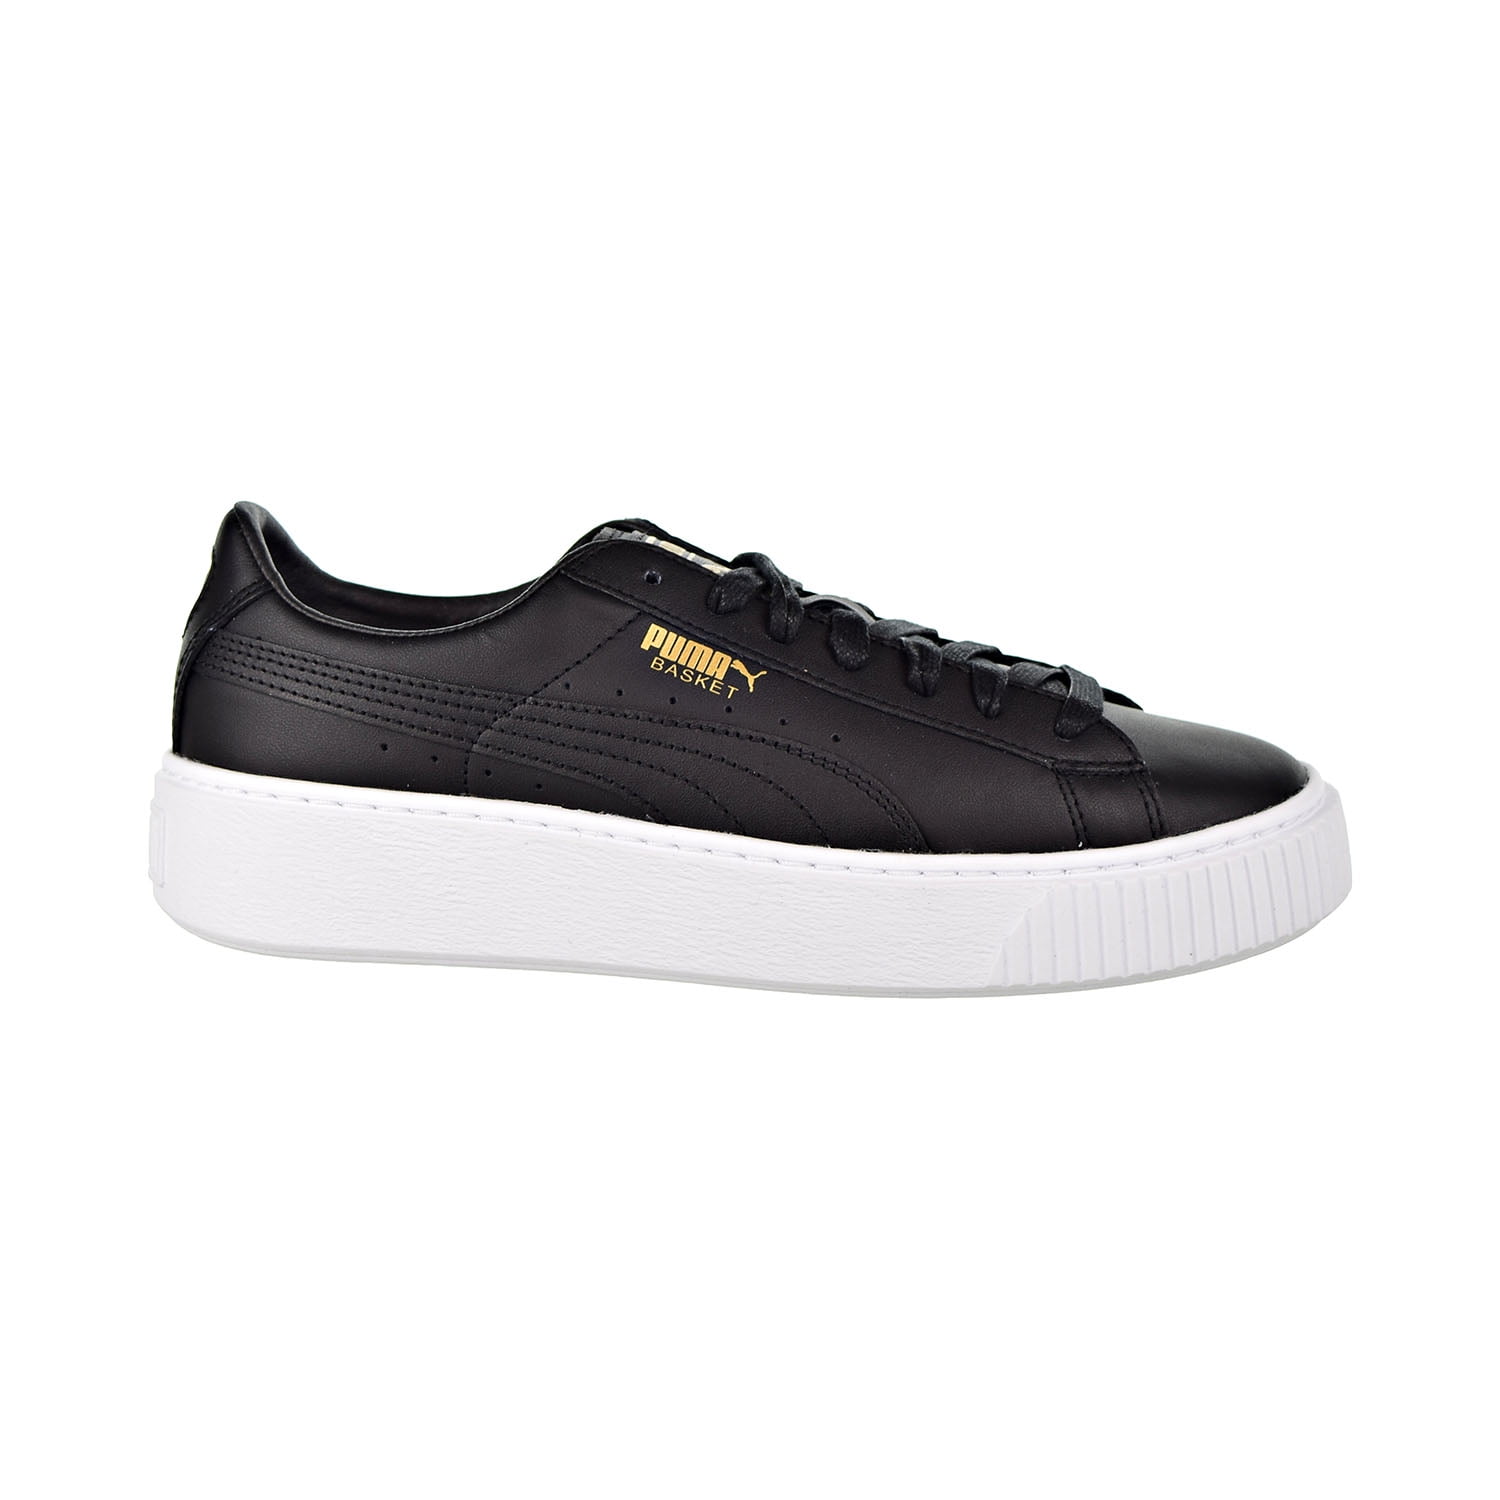 Shoes Puma Black/Gold 364040-03 